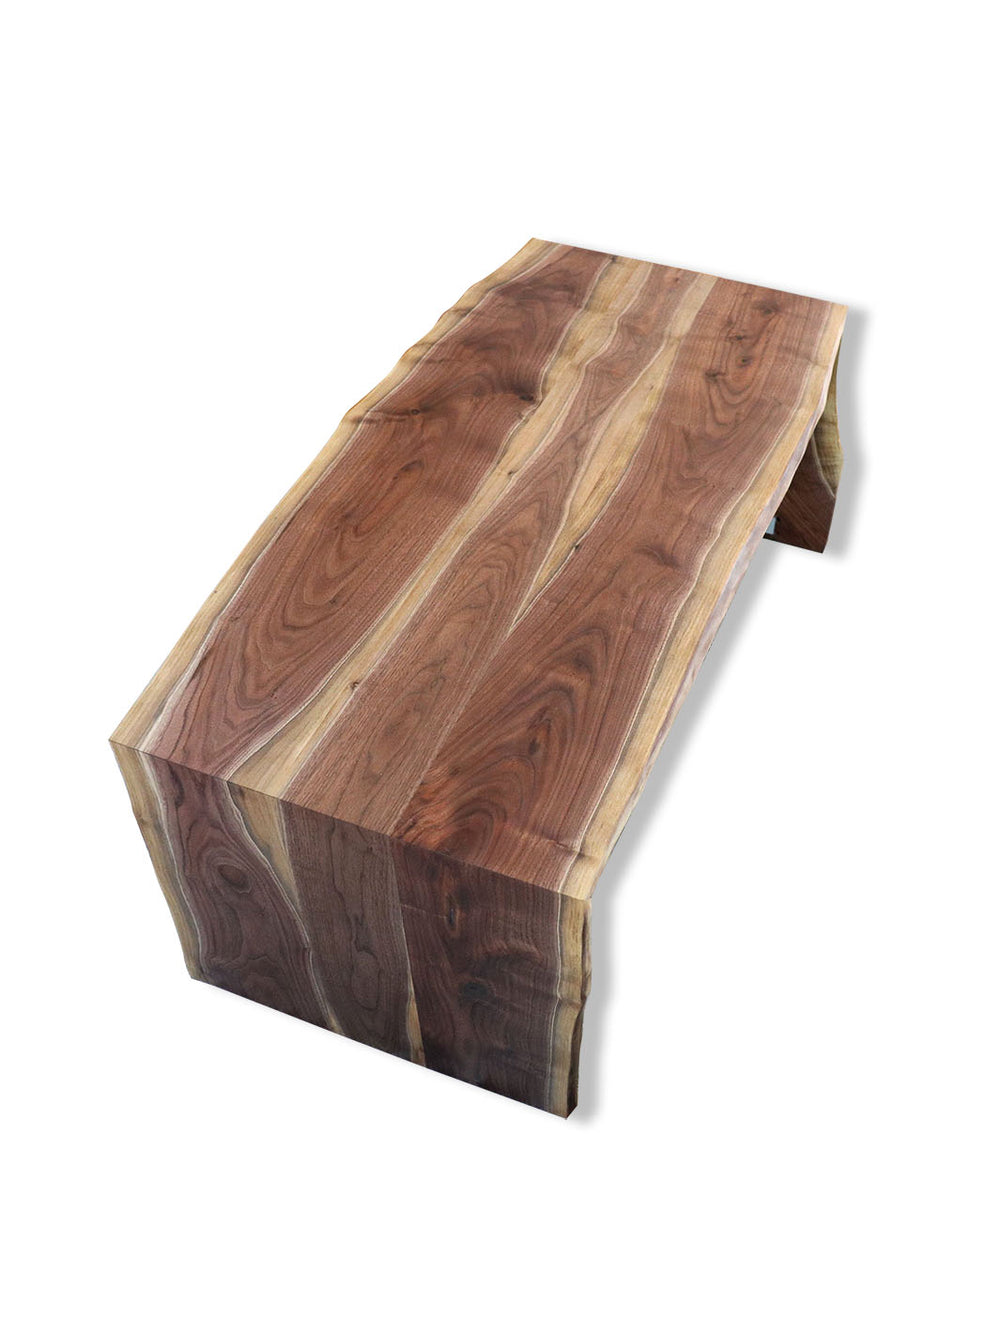 Solid Walnut Wood Slab Double Waterfall Ottoman Coffee Table Earthly Comfort Coffee Tables 1835-1